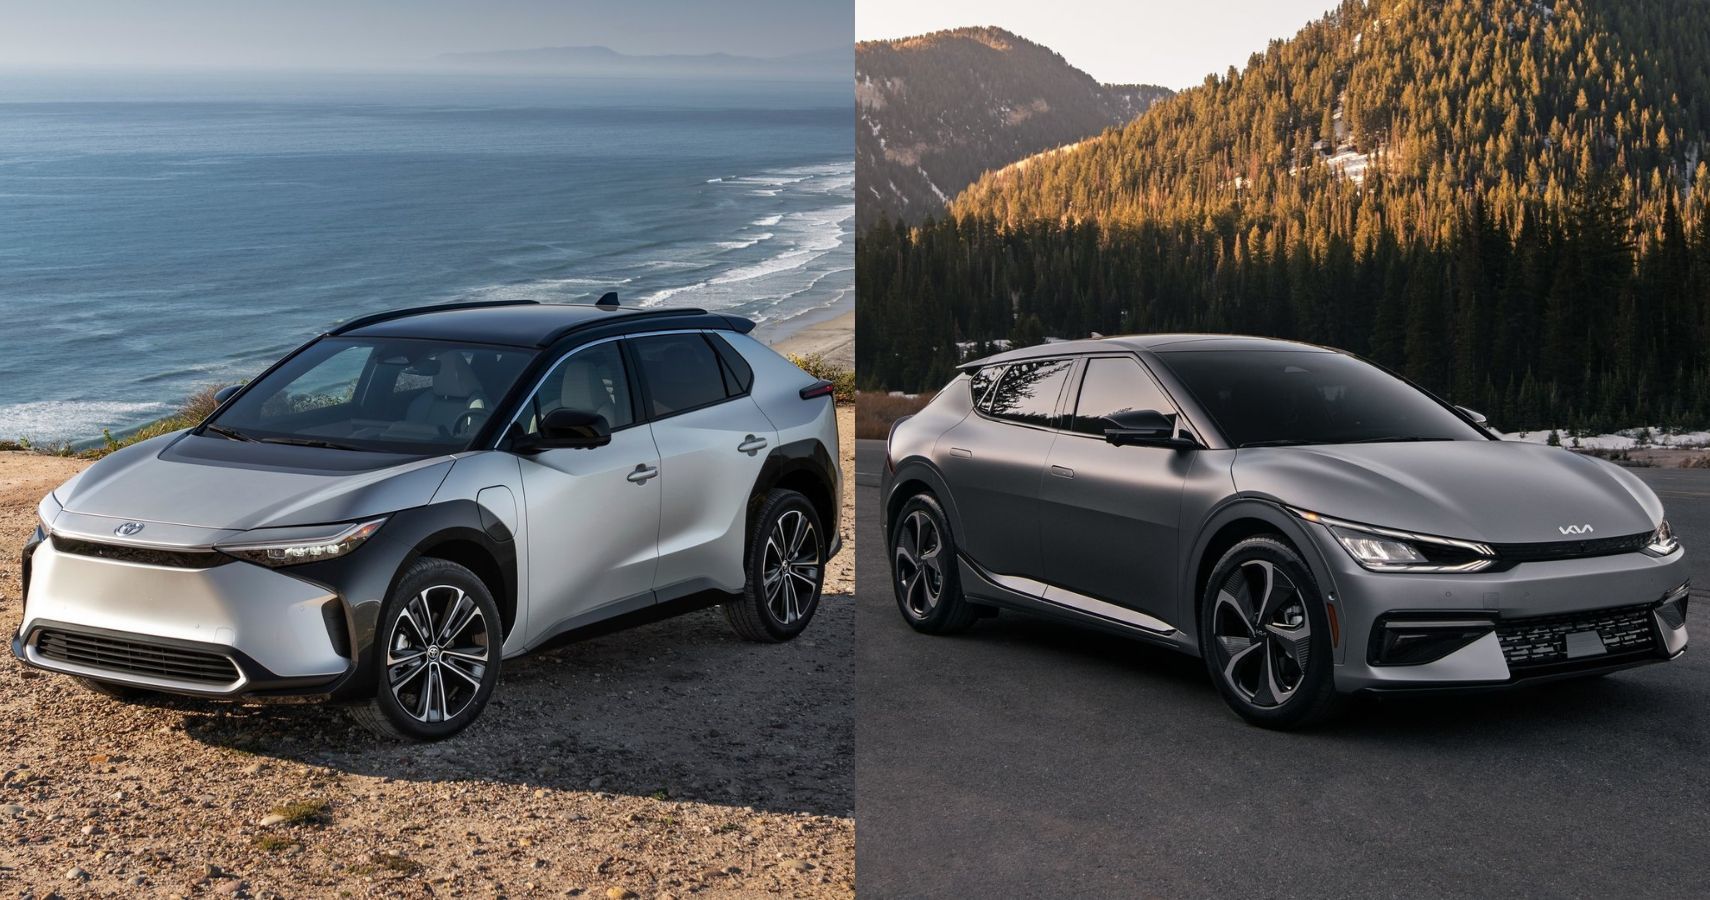  2023 Toyota bZ4X and 2022 Kia EV6 side by side comparison view